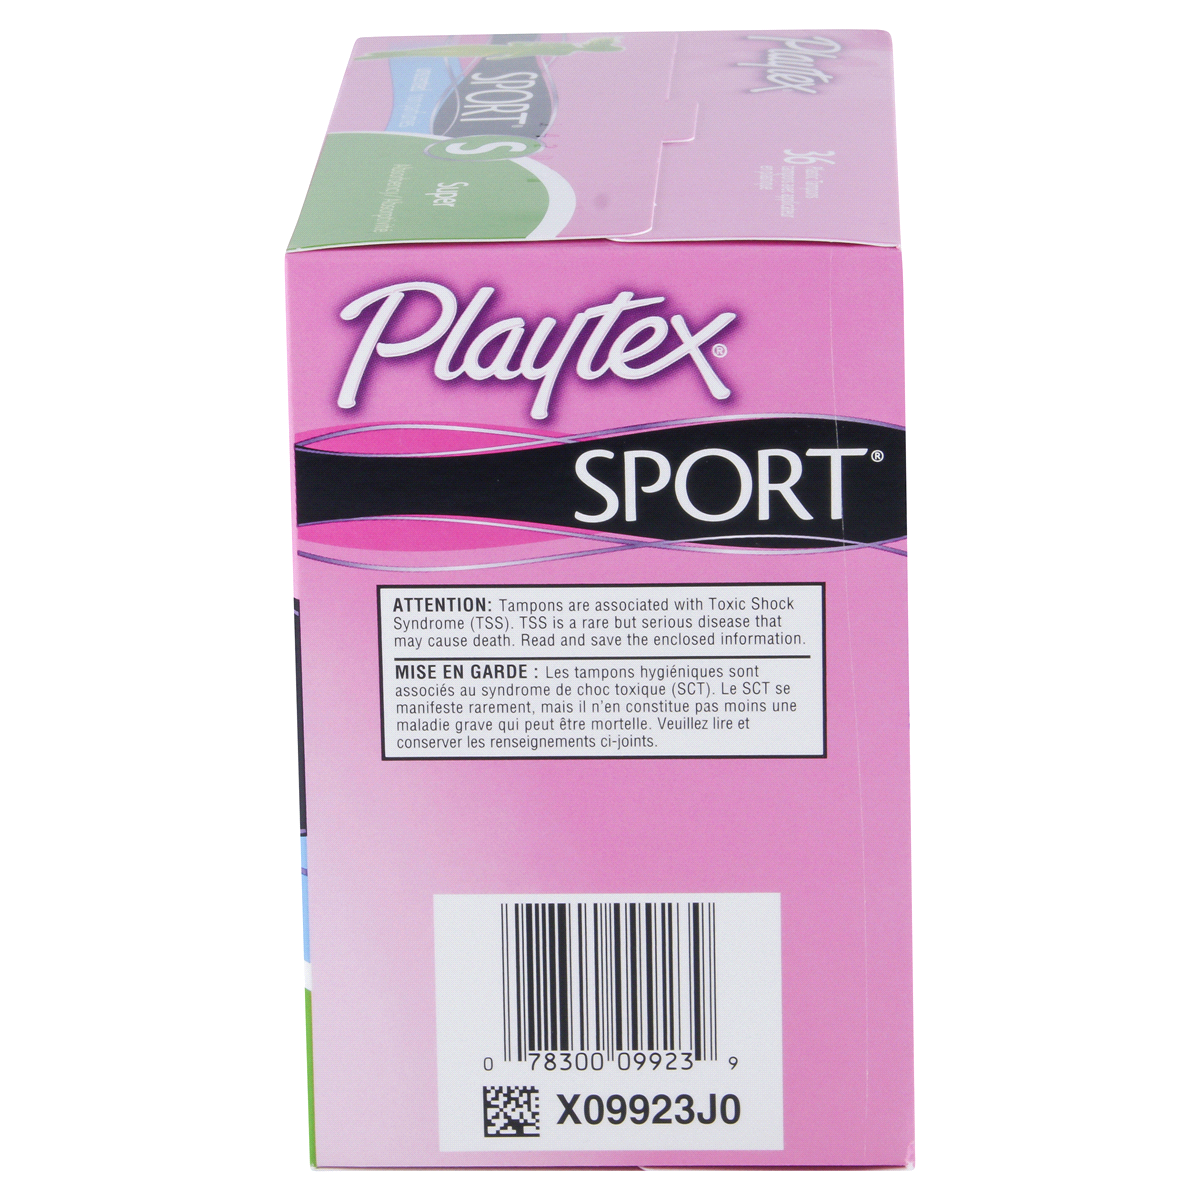 slide 6 of 6, Playtex Sport Super Absorbency Unscented Plastic Tampons, 36 ct